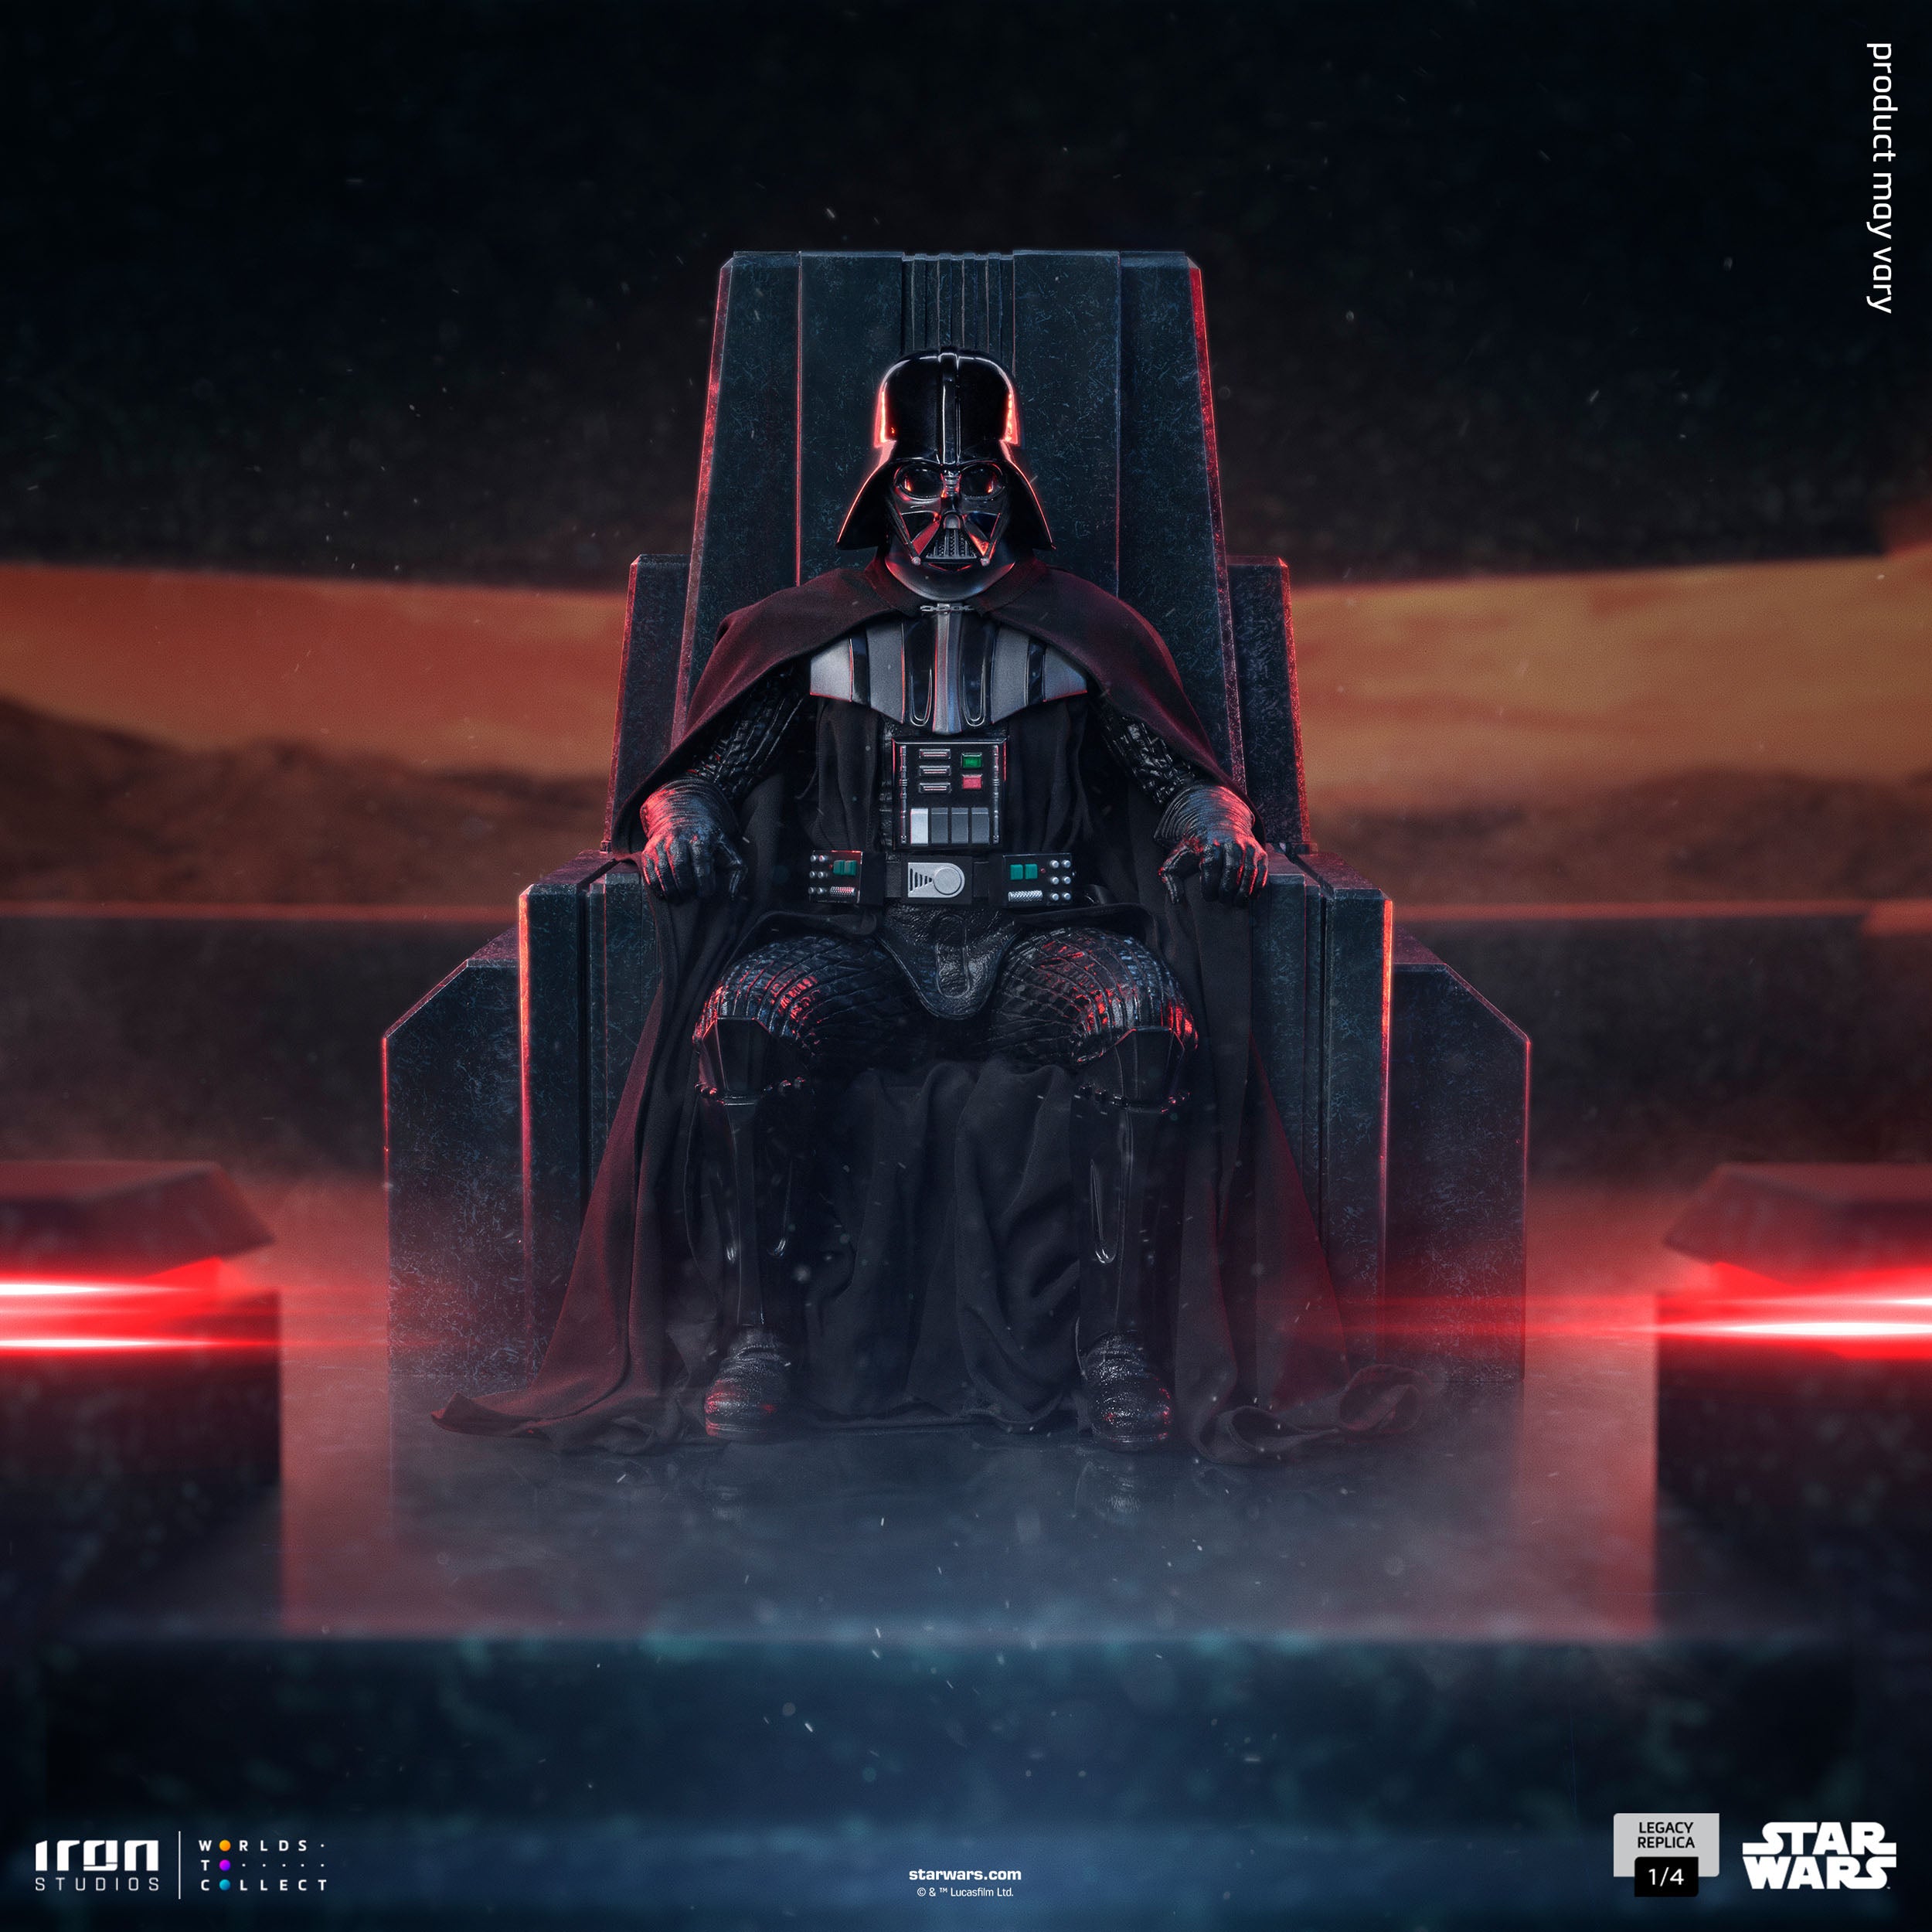 Star Wars - Darth Vader on Throne.